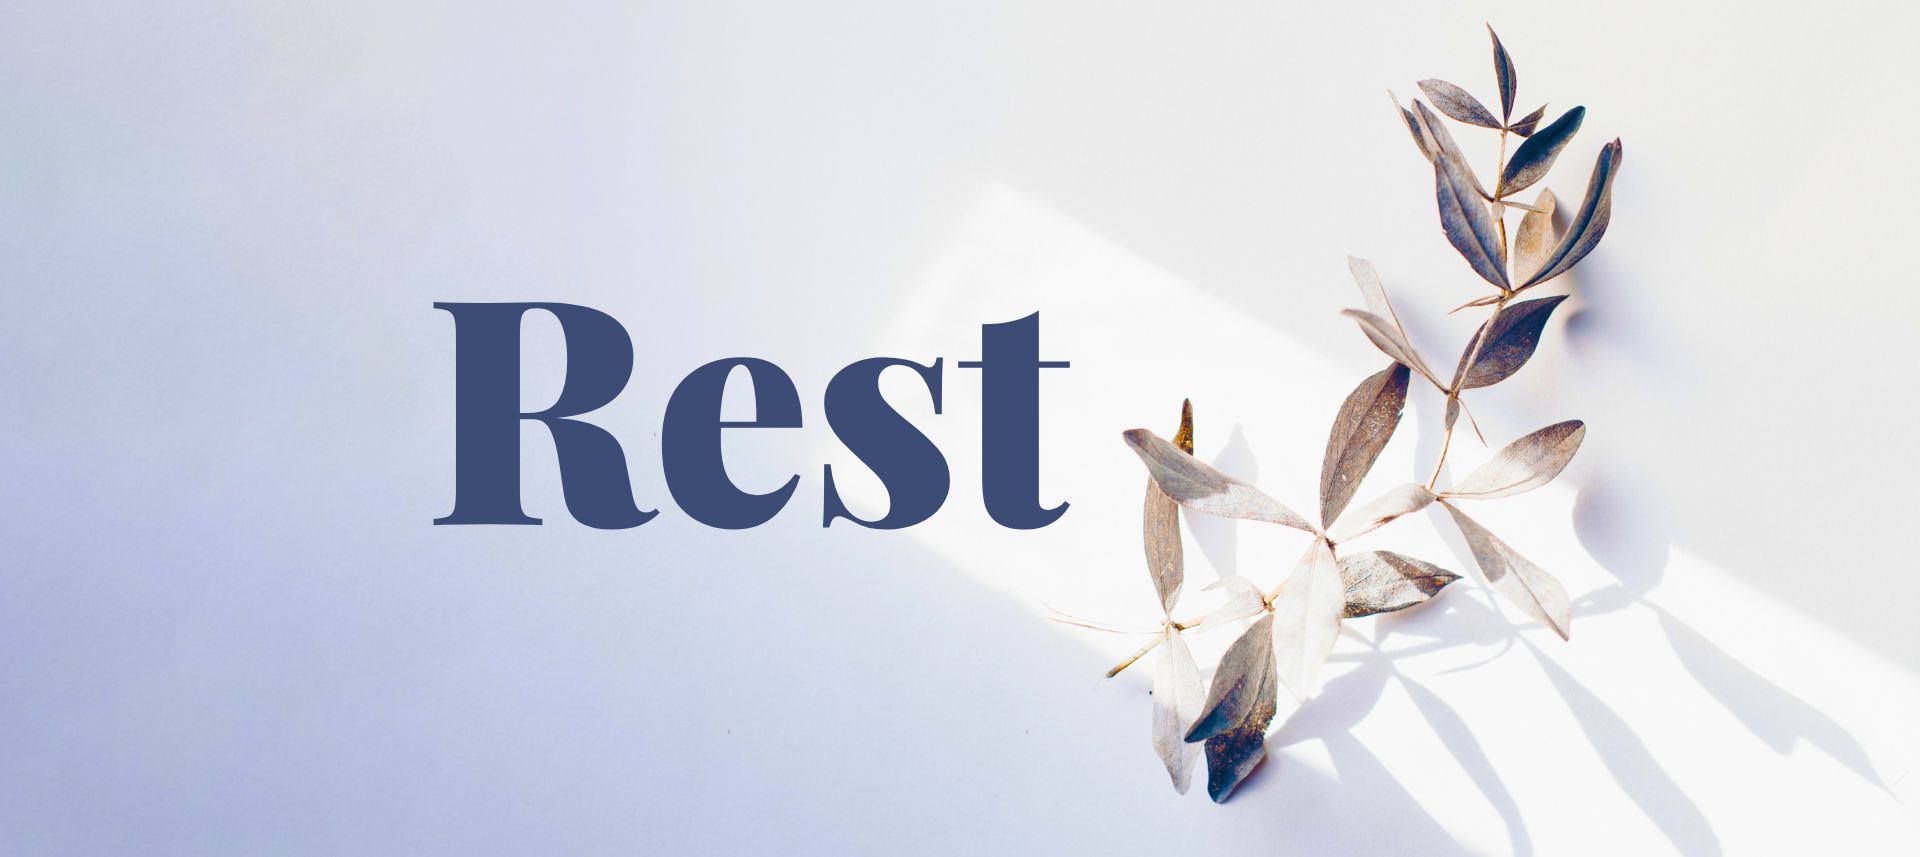 A sermon series on Biblical Rest